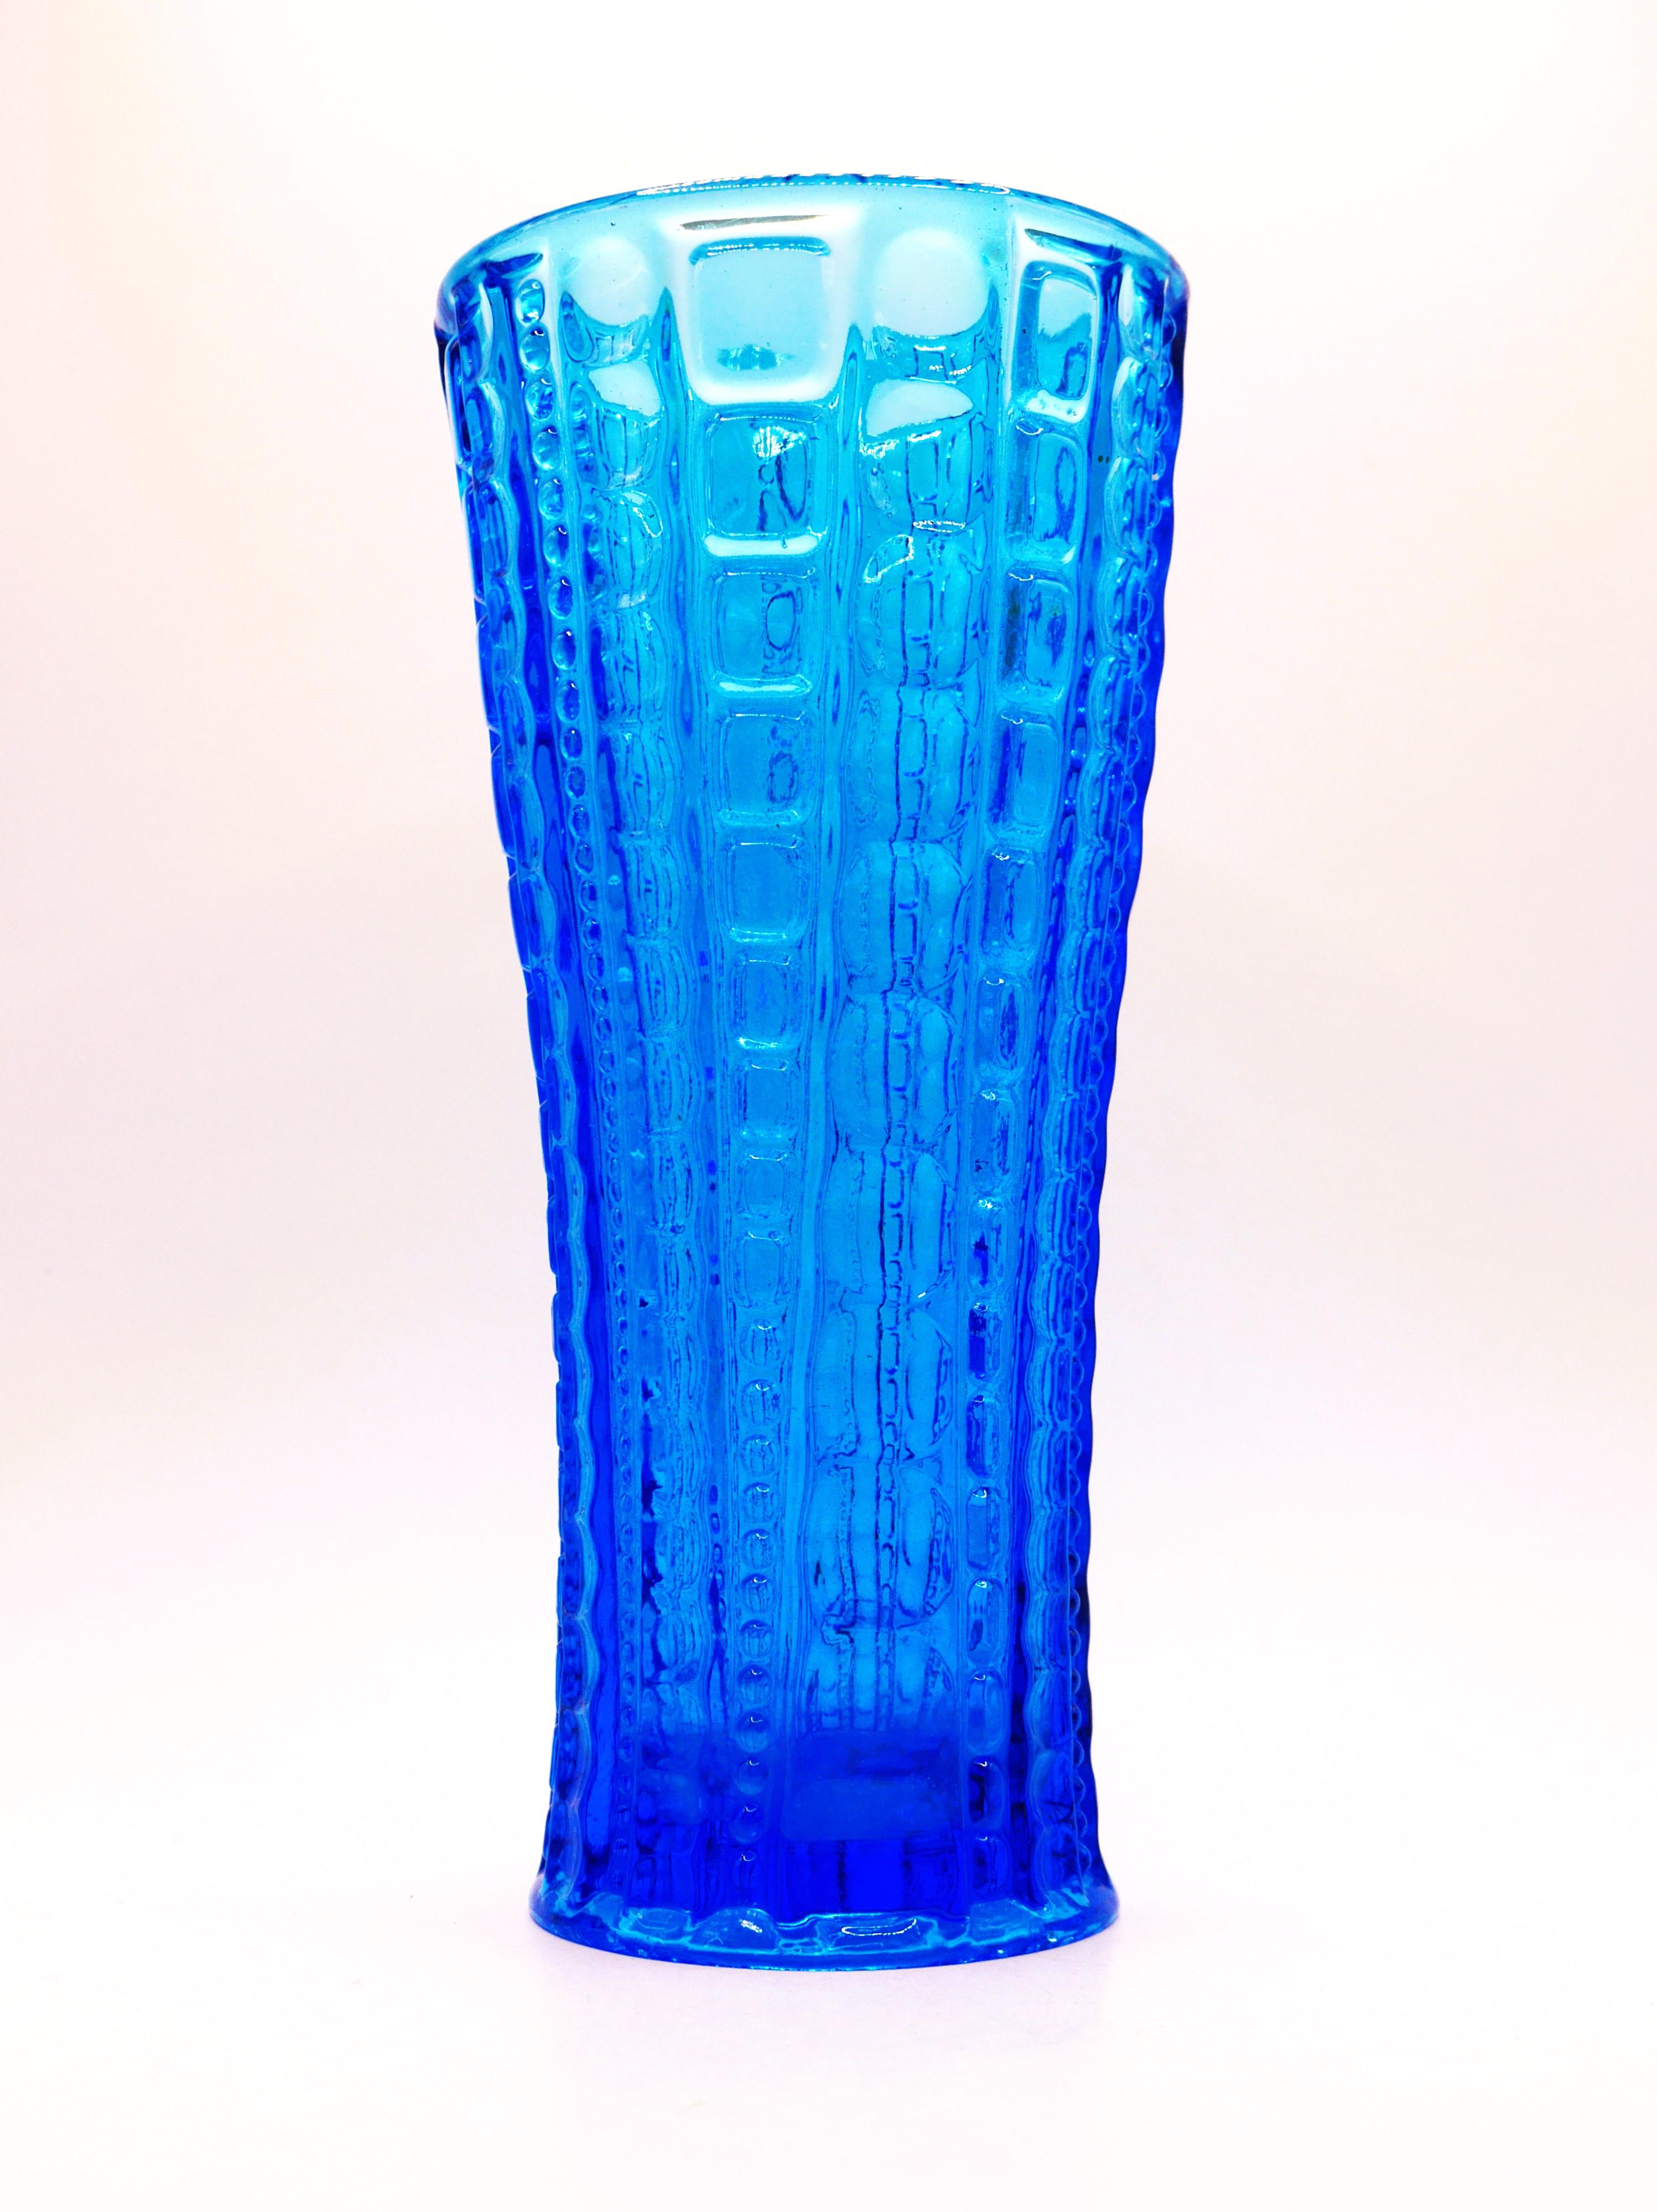 Mid-century modern glass vase by Jan Sylwester Drost for Ząbkowice, Poland. 4